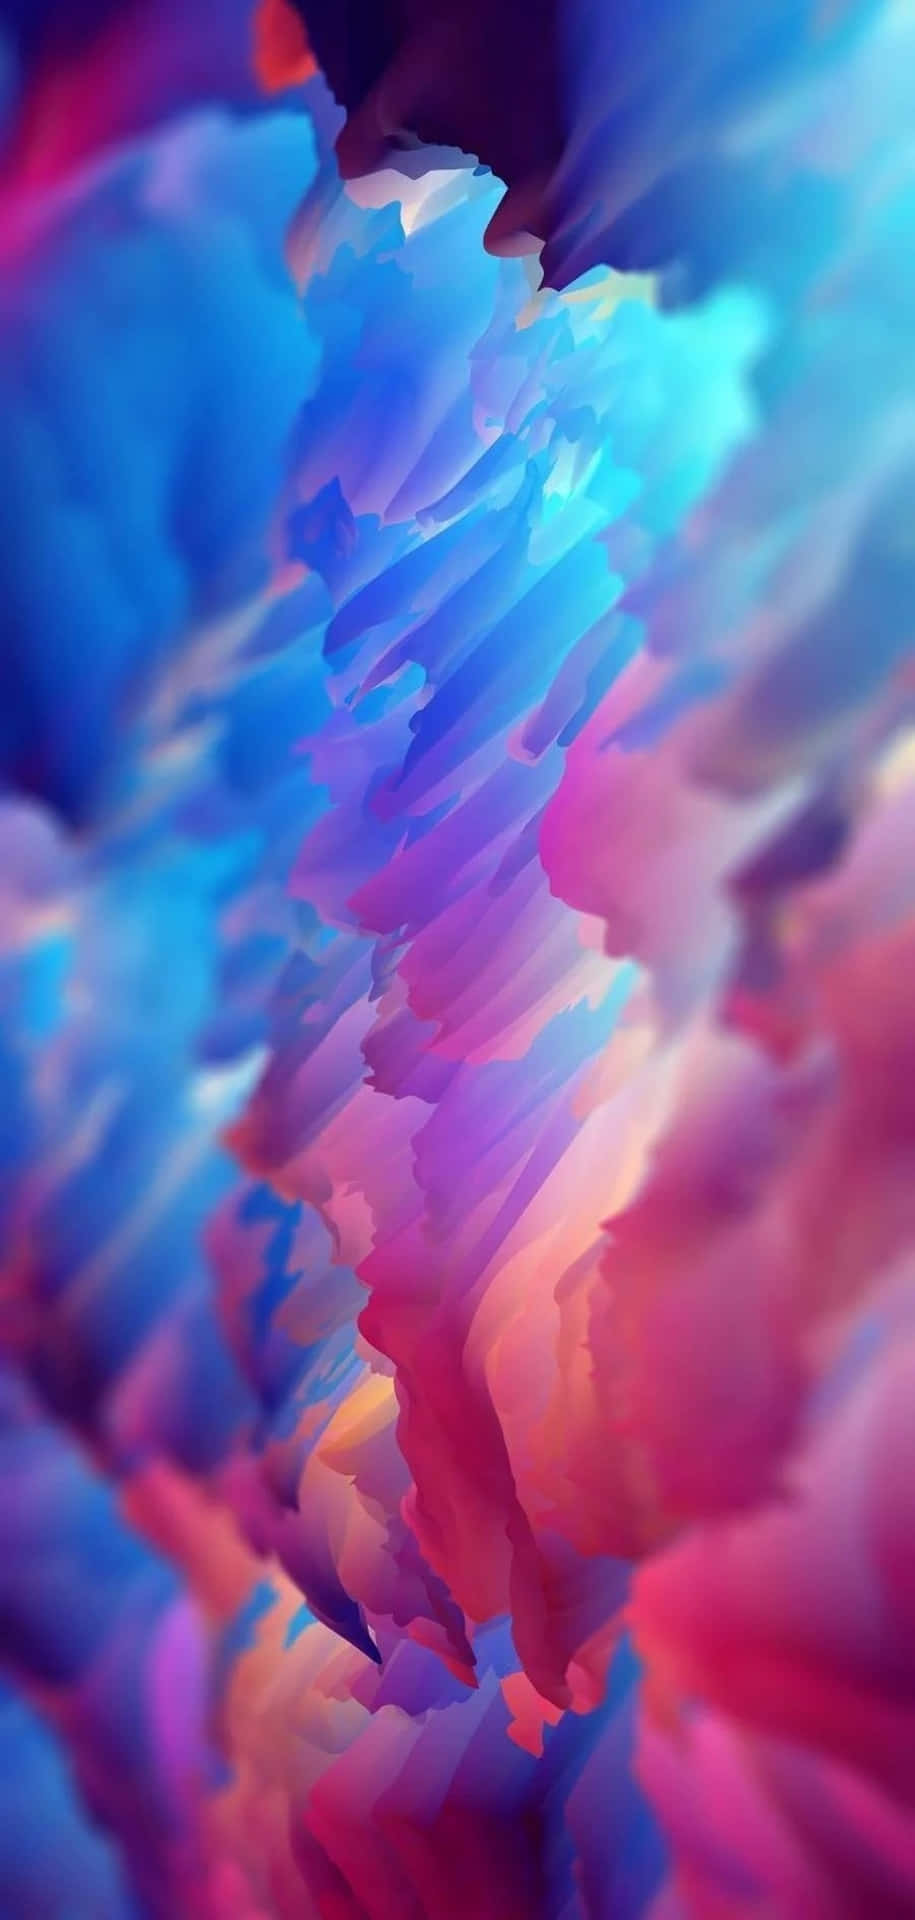 Vibrant Abstract Digital Art on 4K Phone Wallpaper